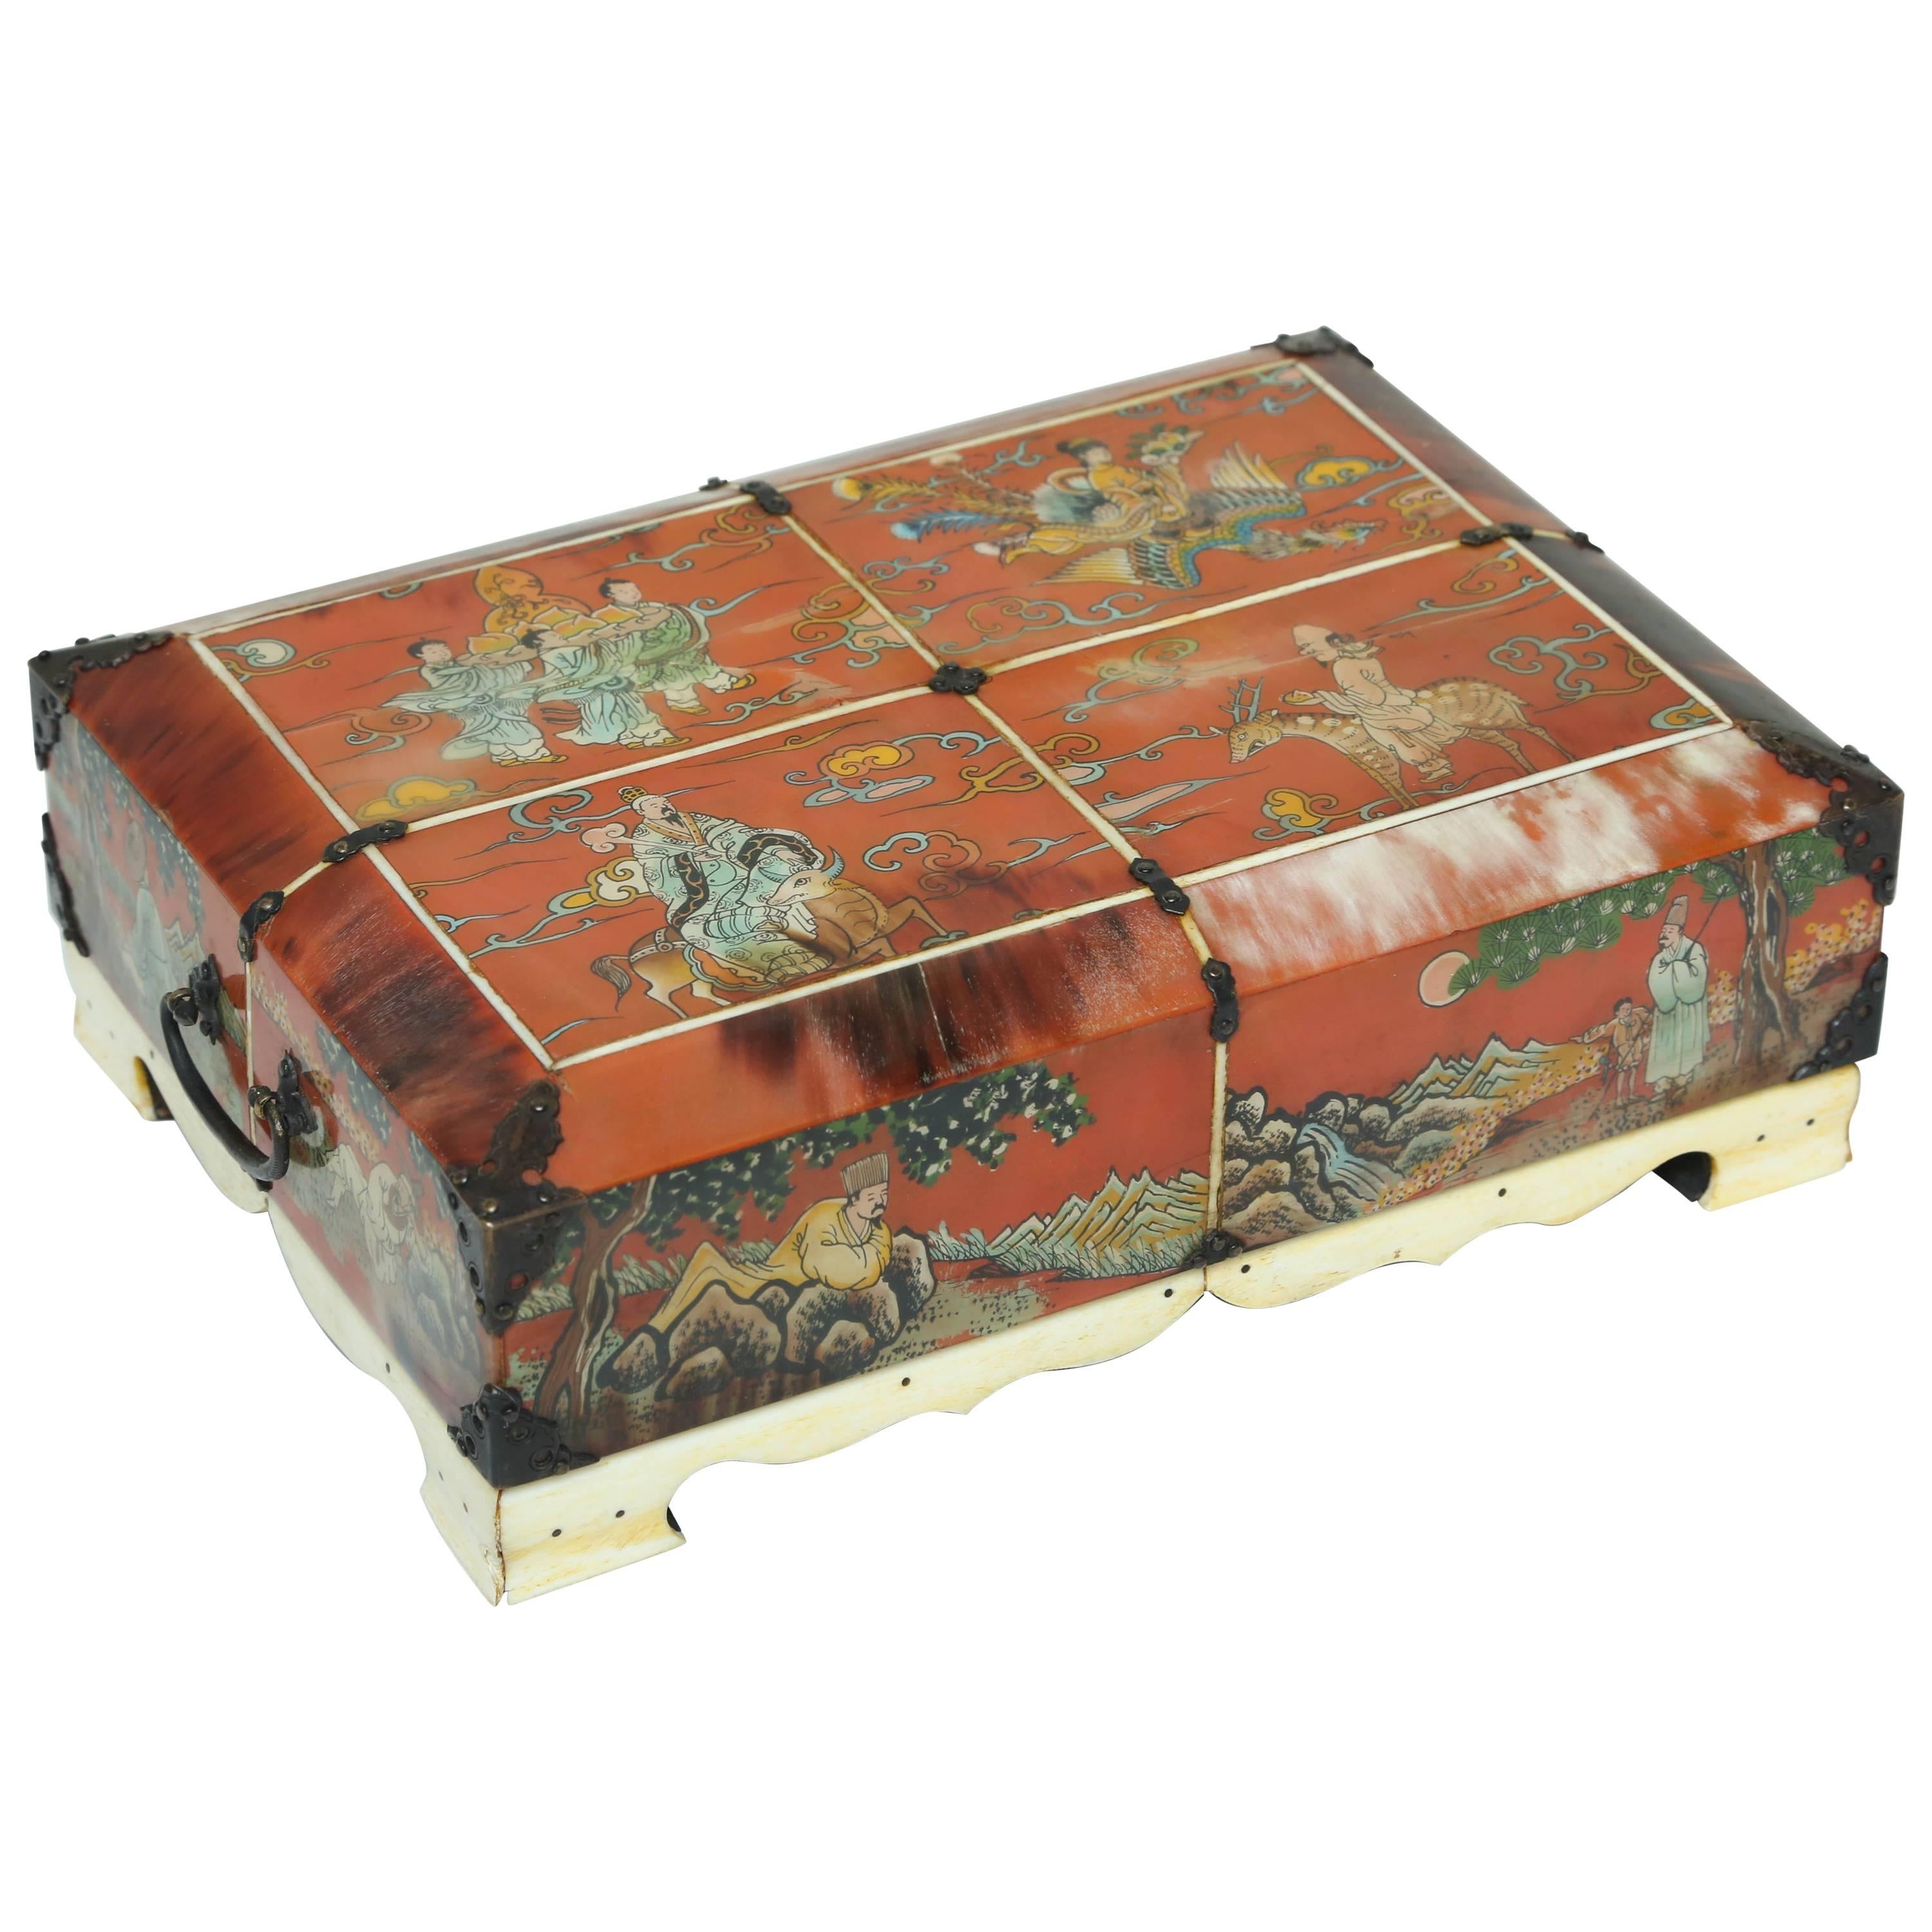 Superb 19th Century Chinese Jewel Box